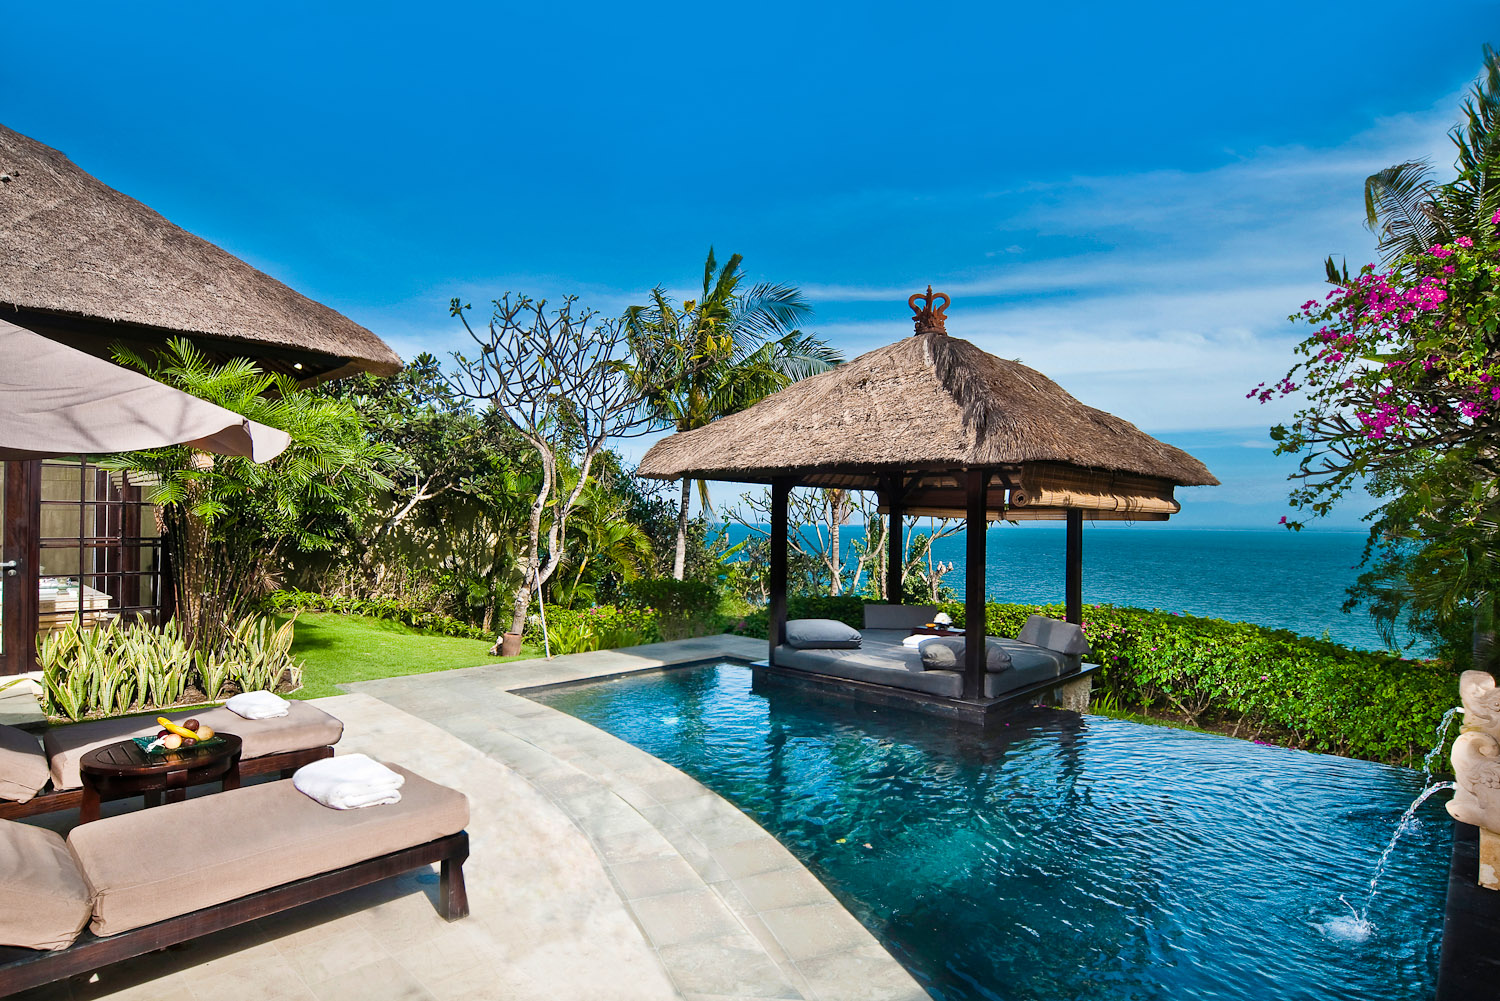 19a2fec14d8e3879a18ba2a874ca2553701e7e4d-bc7ff Top 10 Places to Visit in Bali for Honeymoon